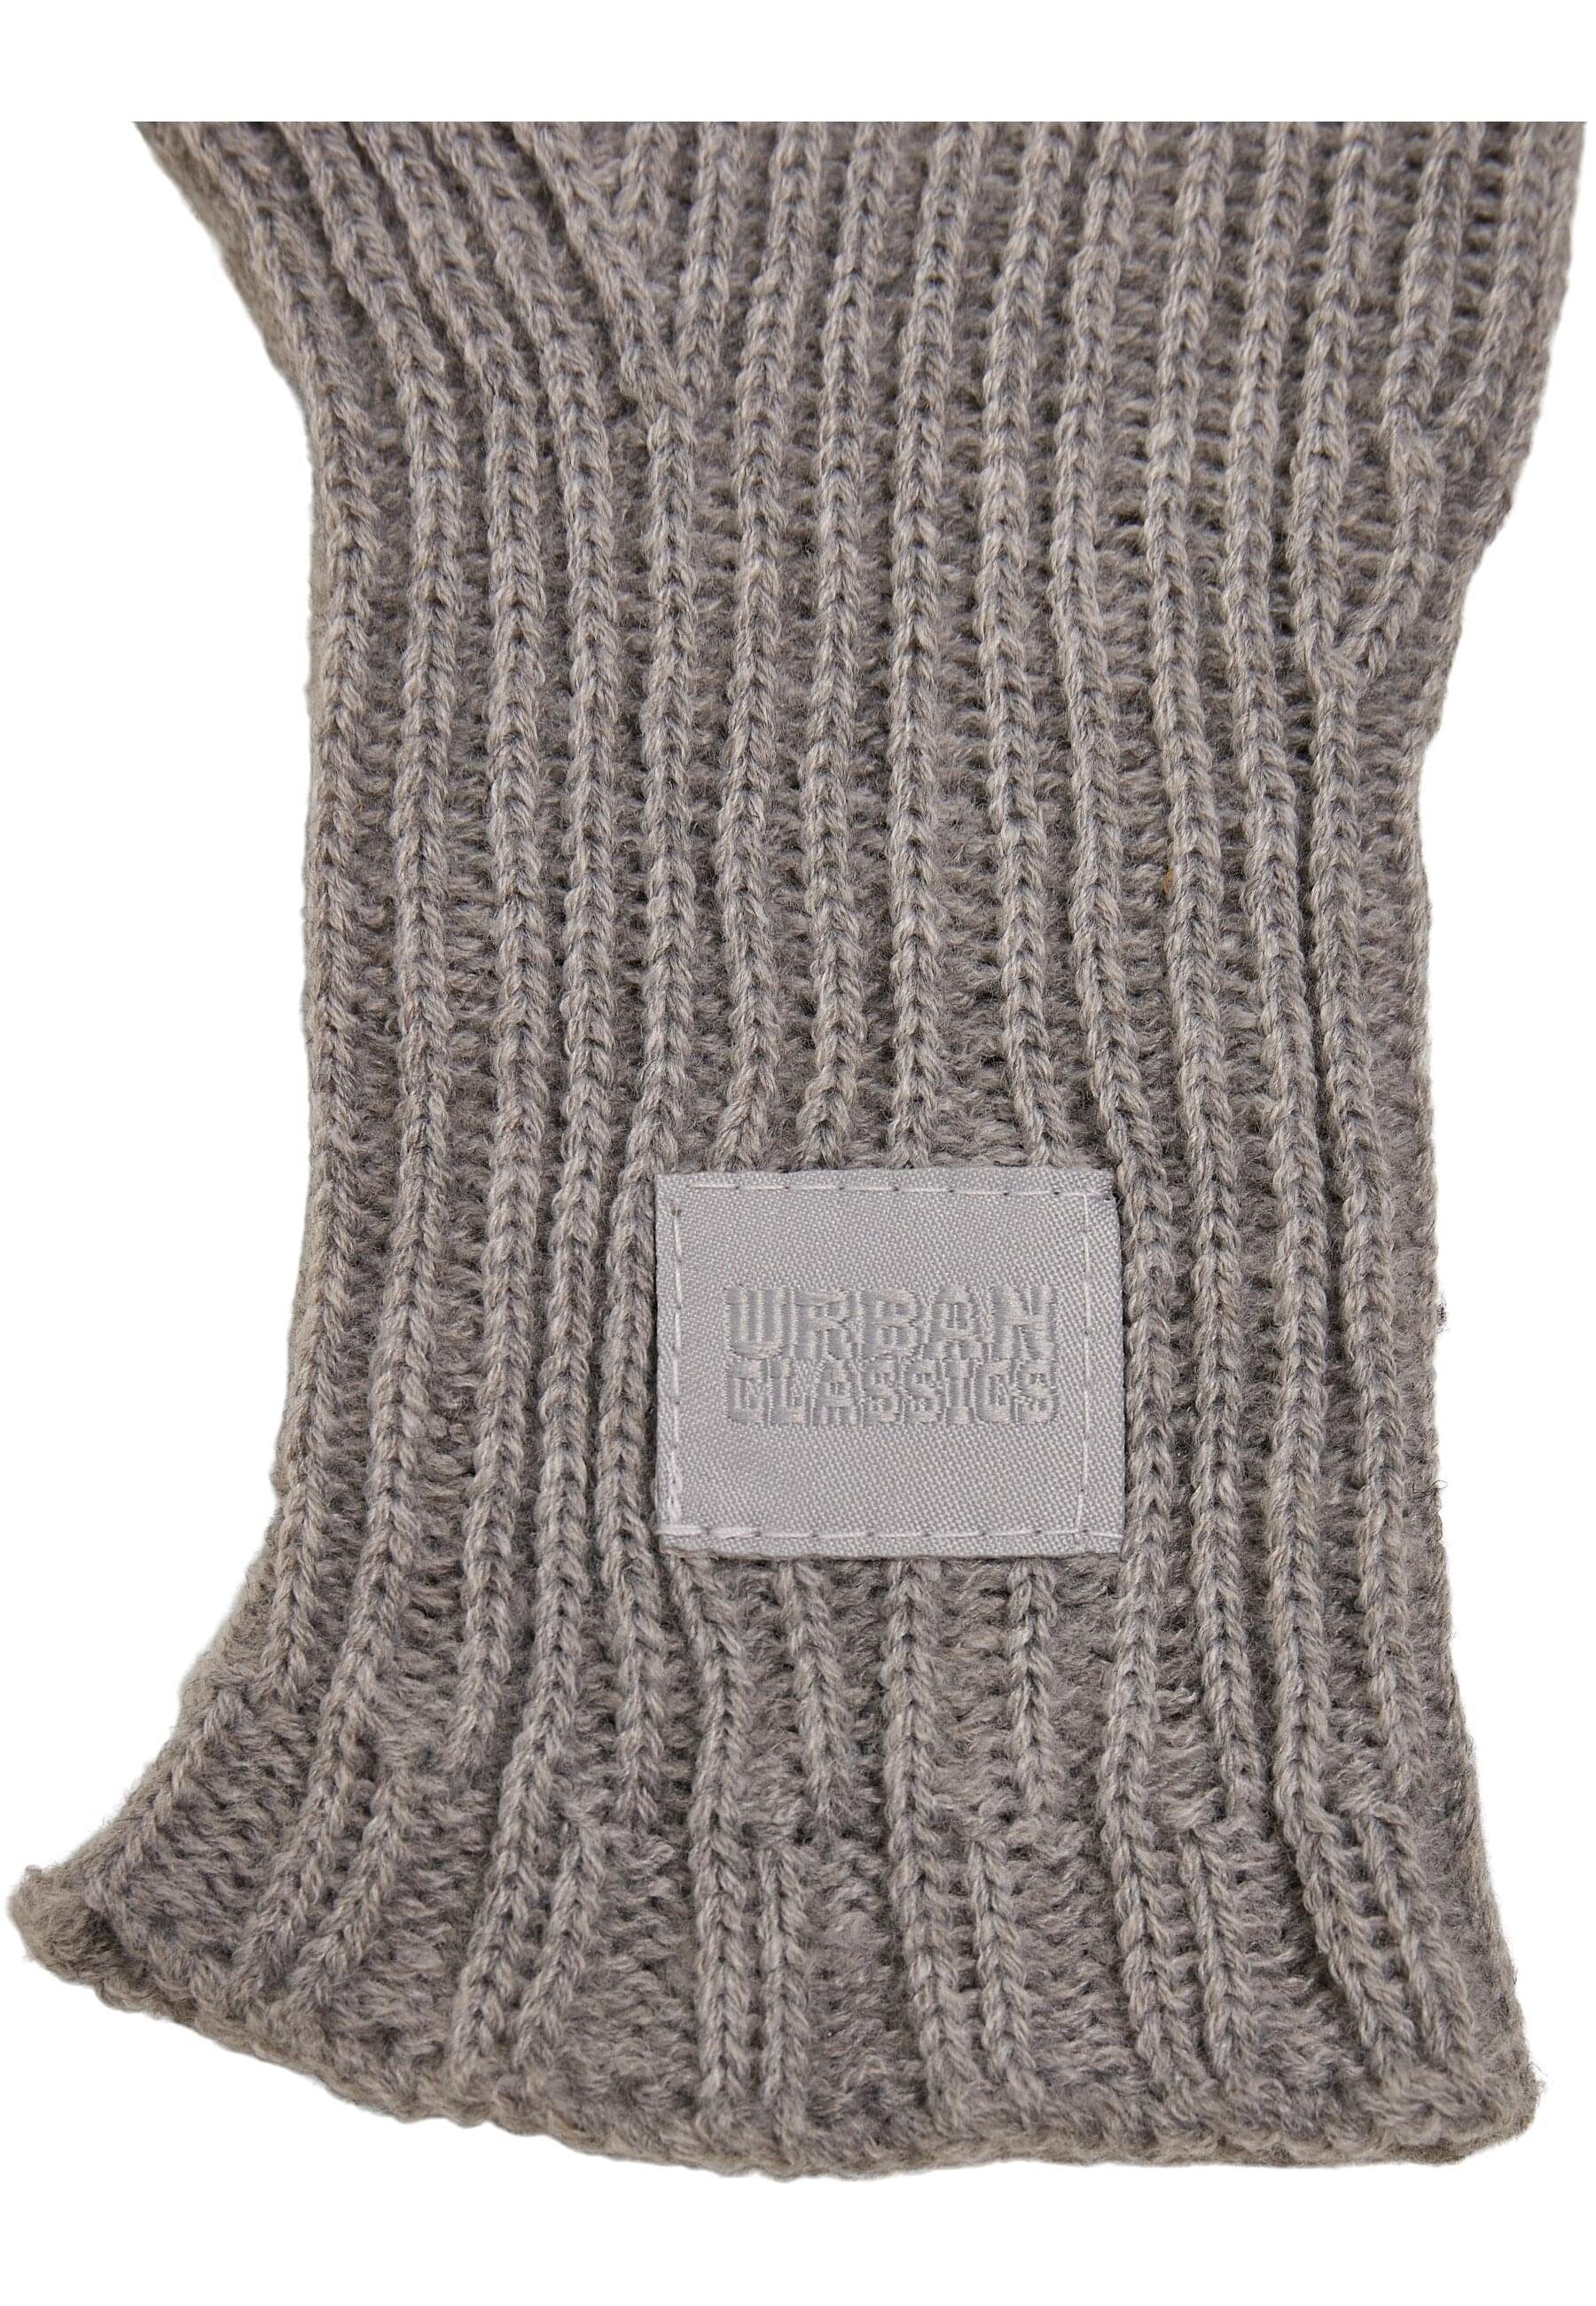 URBAN Smart heathergrey CLASSICS Mix Gloves Wool Unisex Baumwollhandschuhe Knitted